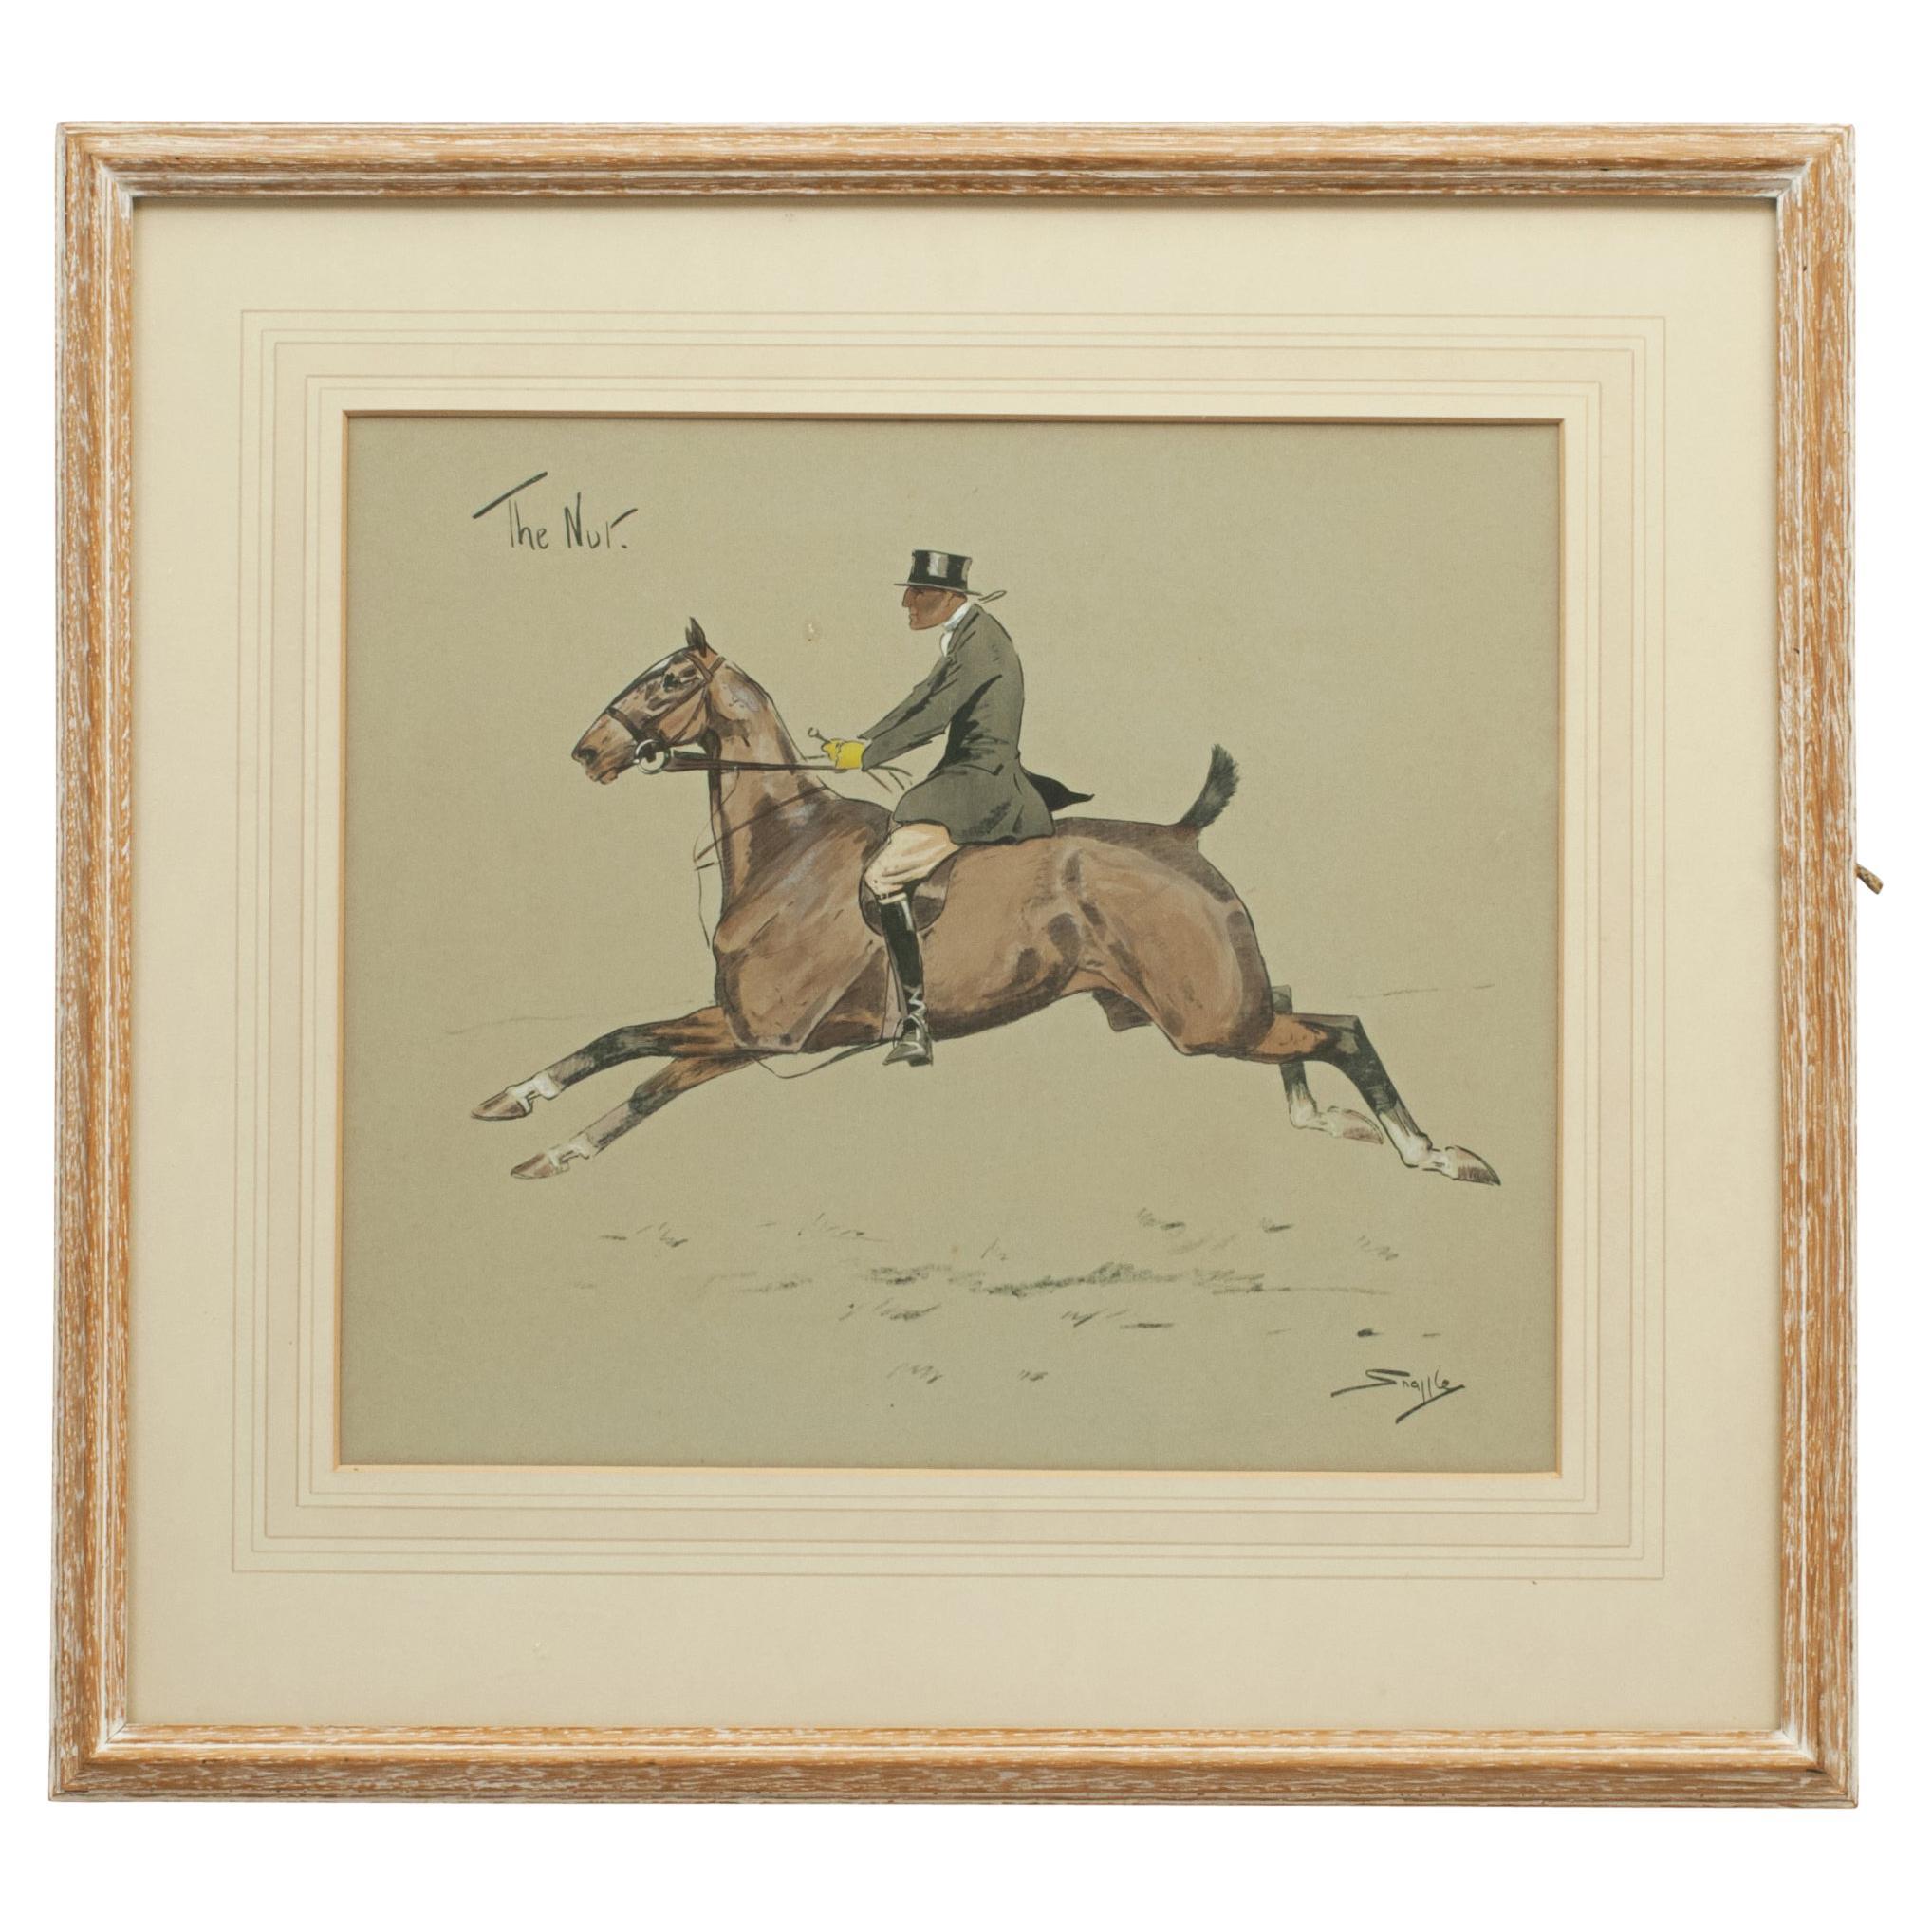 Rare Snaffles Equestrian Hunting Print, The Nut, Charles Johnson Payne